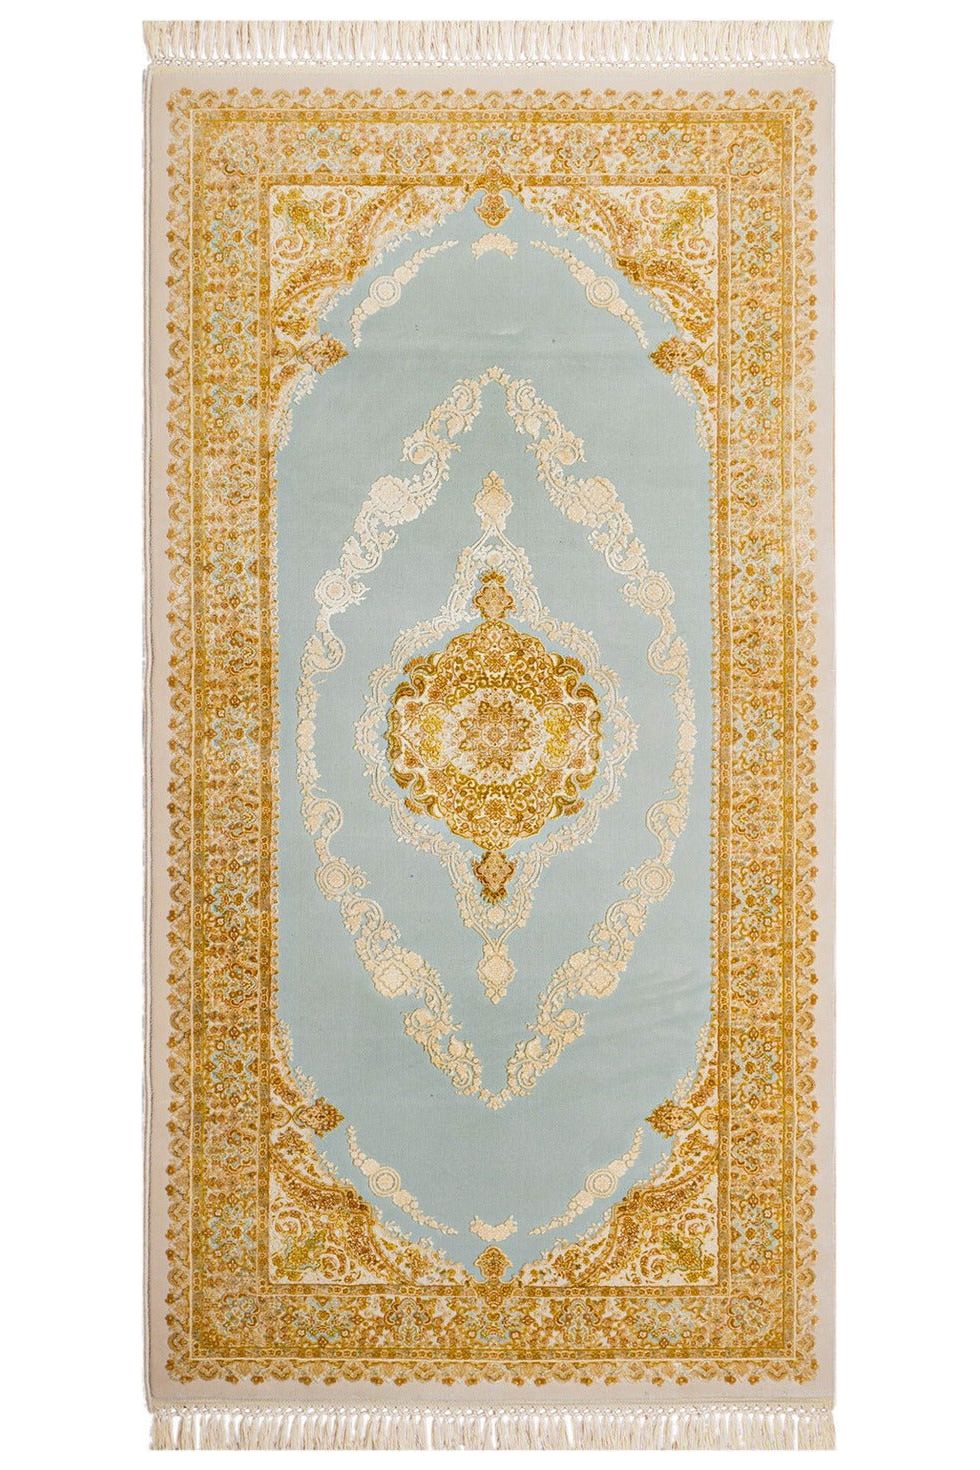 #Turkish_Carpets_Rugs# #Modern_Carpets# #Abrash_Carpets#Abrash-18005285-200x100